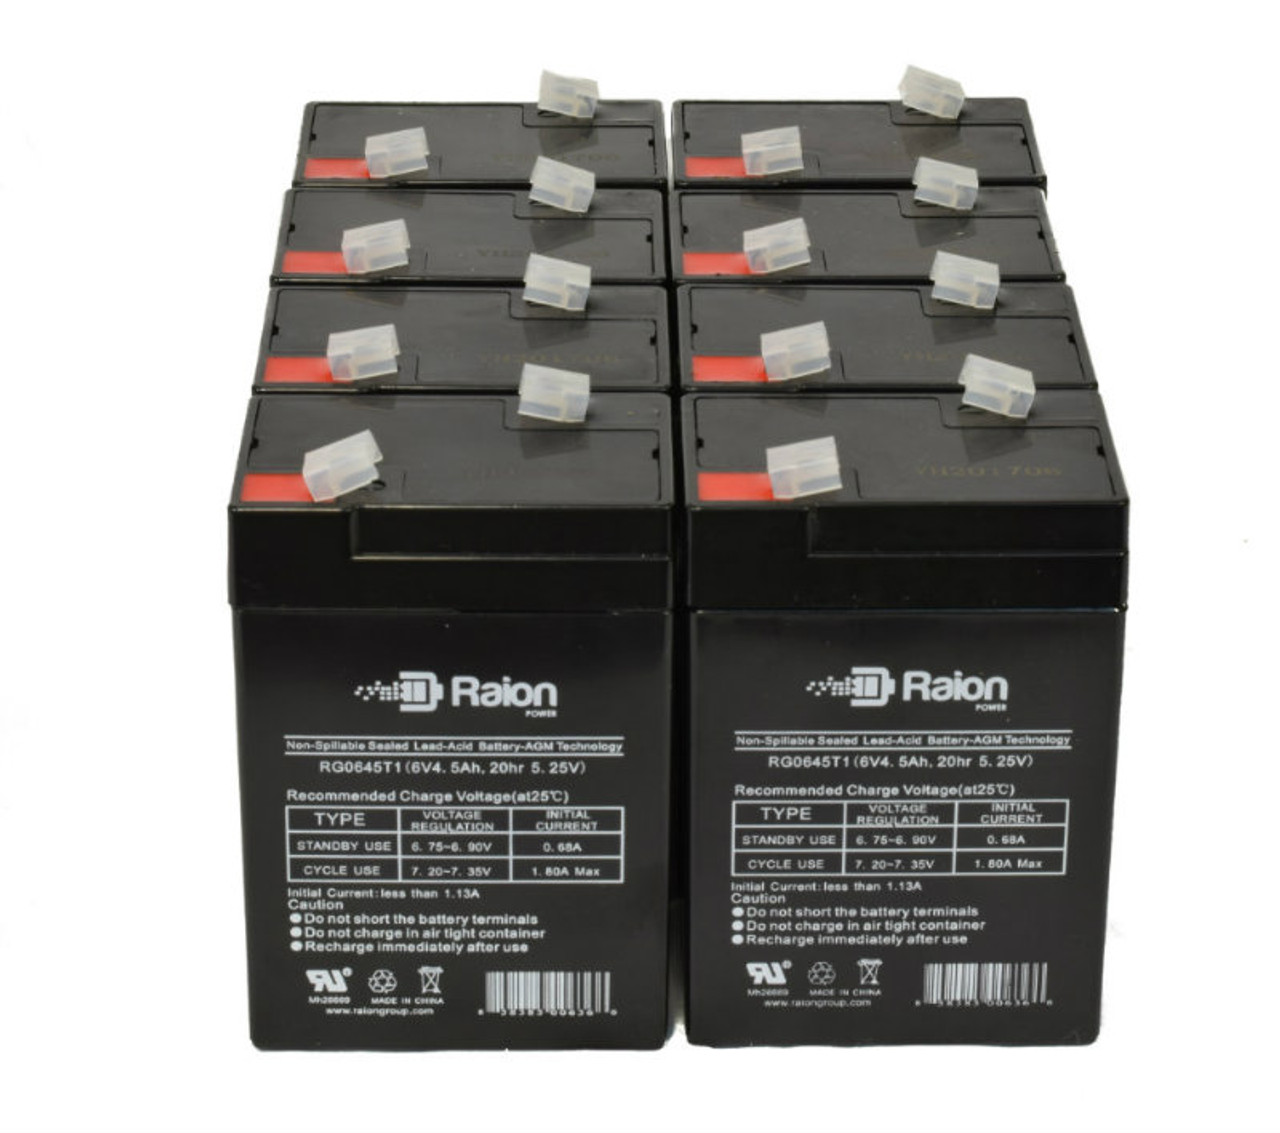 Raion Power 6 Volt 4.5Ah RG0645T1 Replacement Battery for Fengri 3-FM-4.0 - 8 Pack